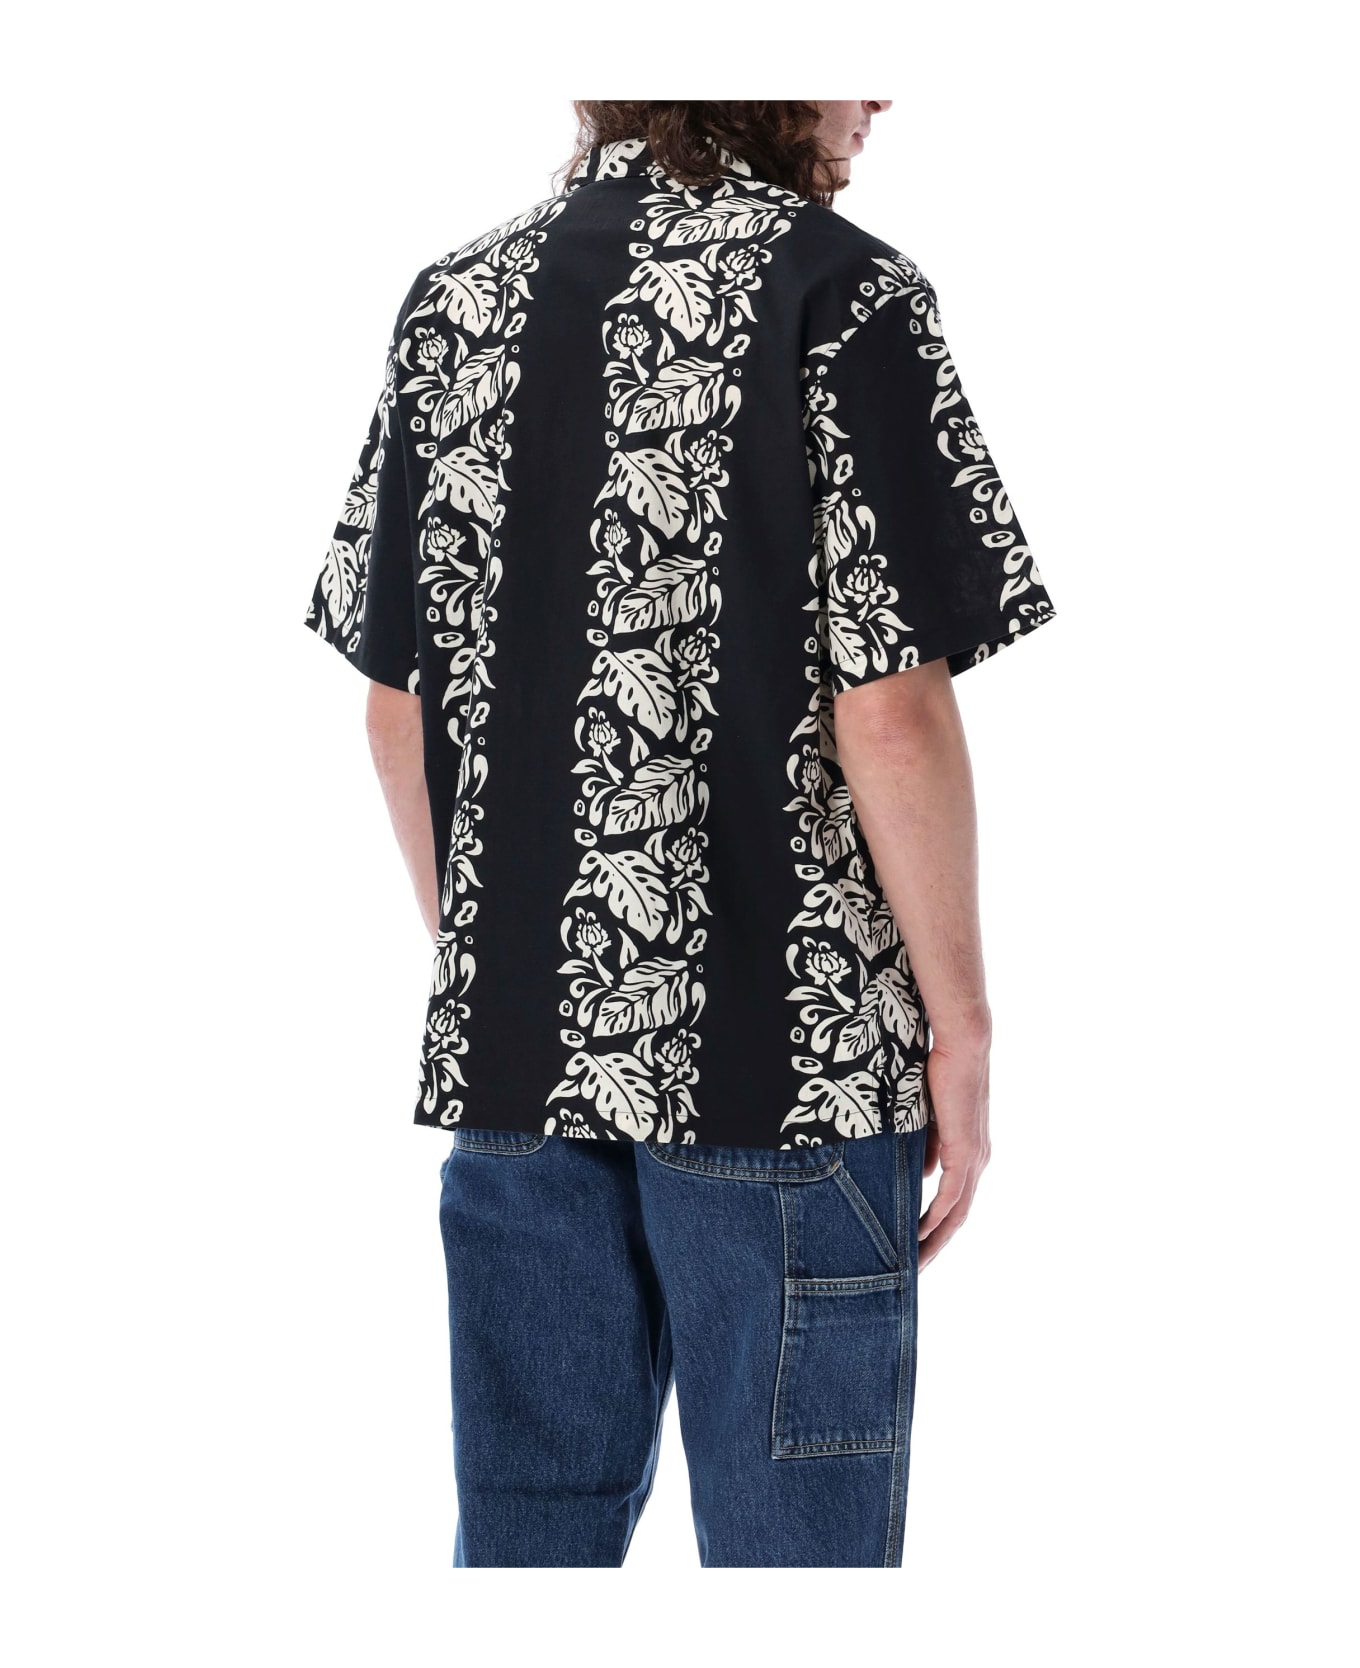 Carhartt Floral Shirt - BLACK